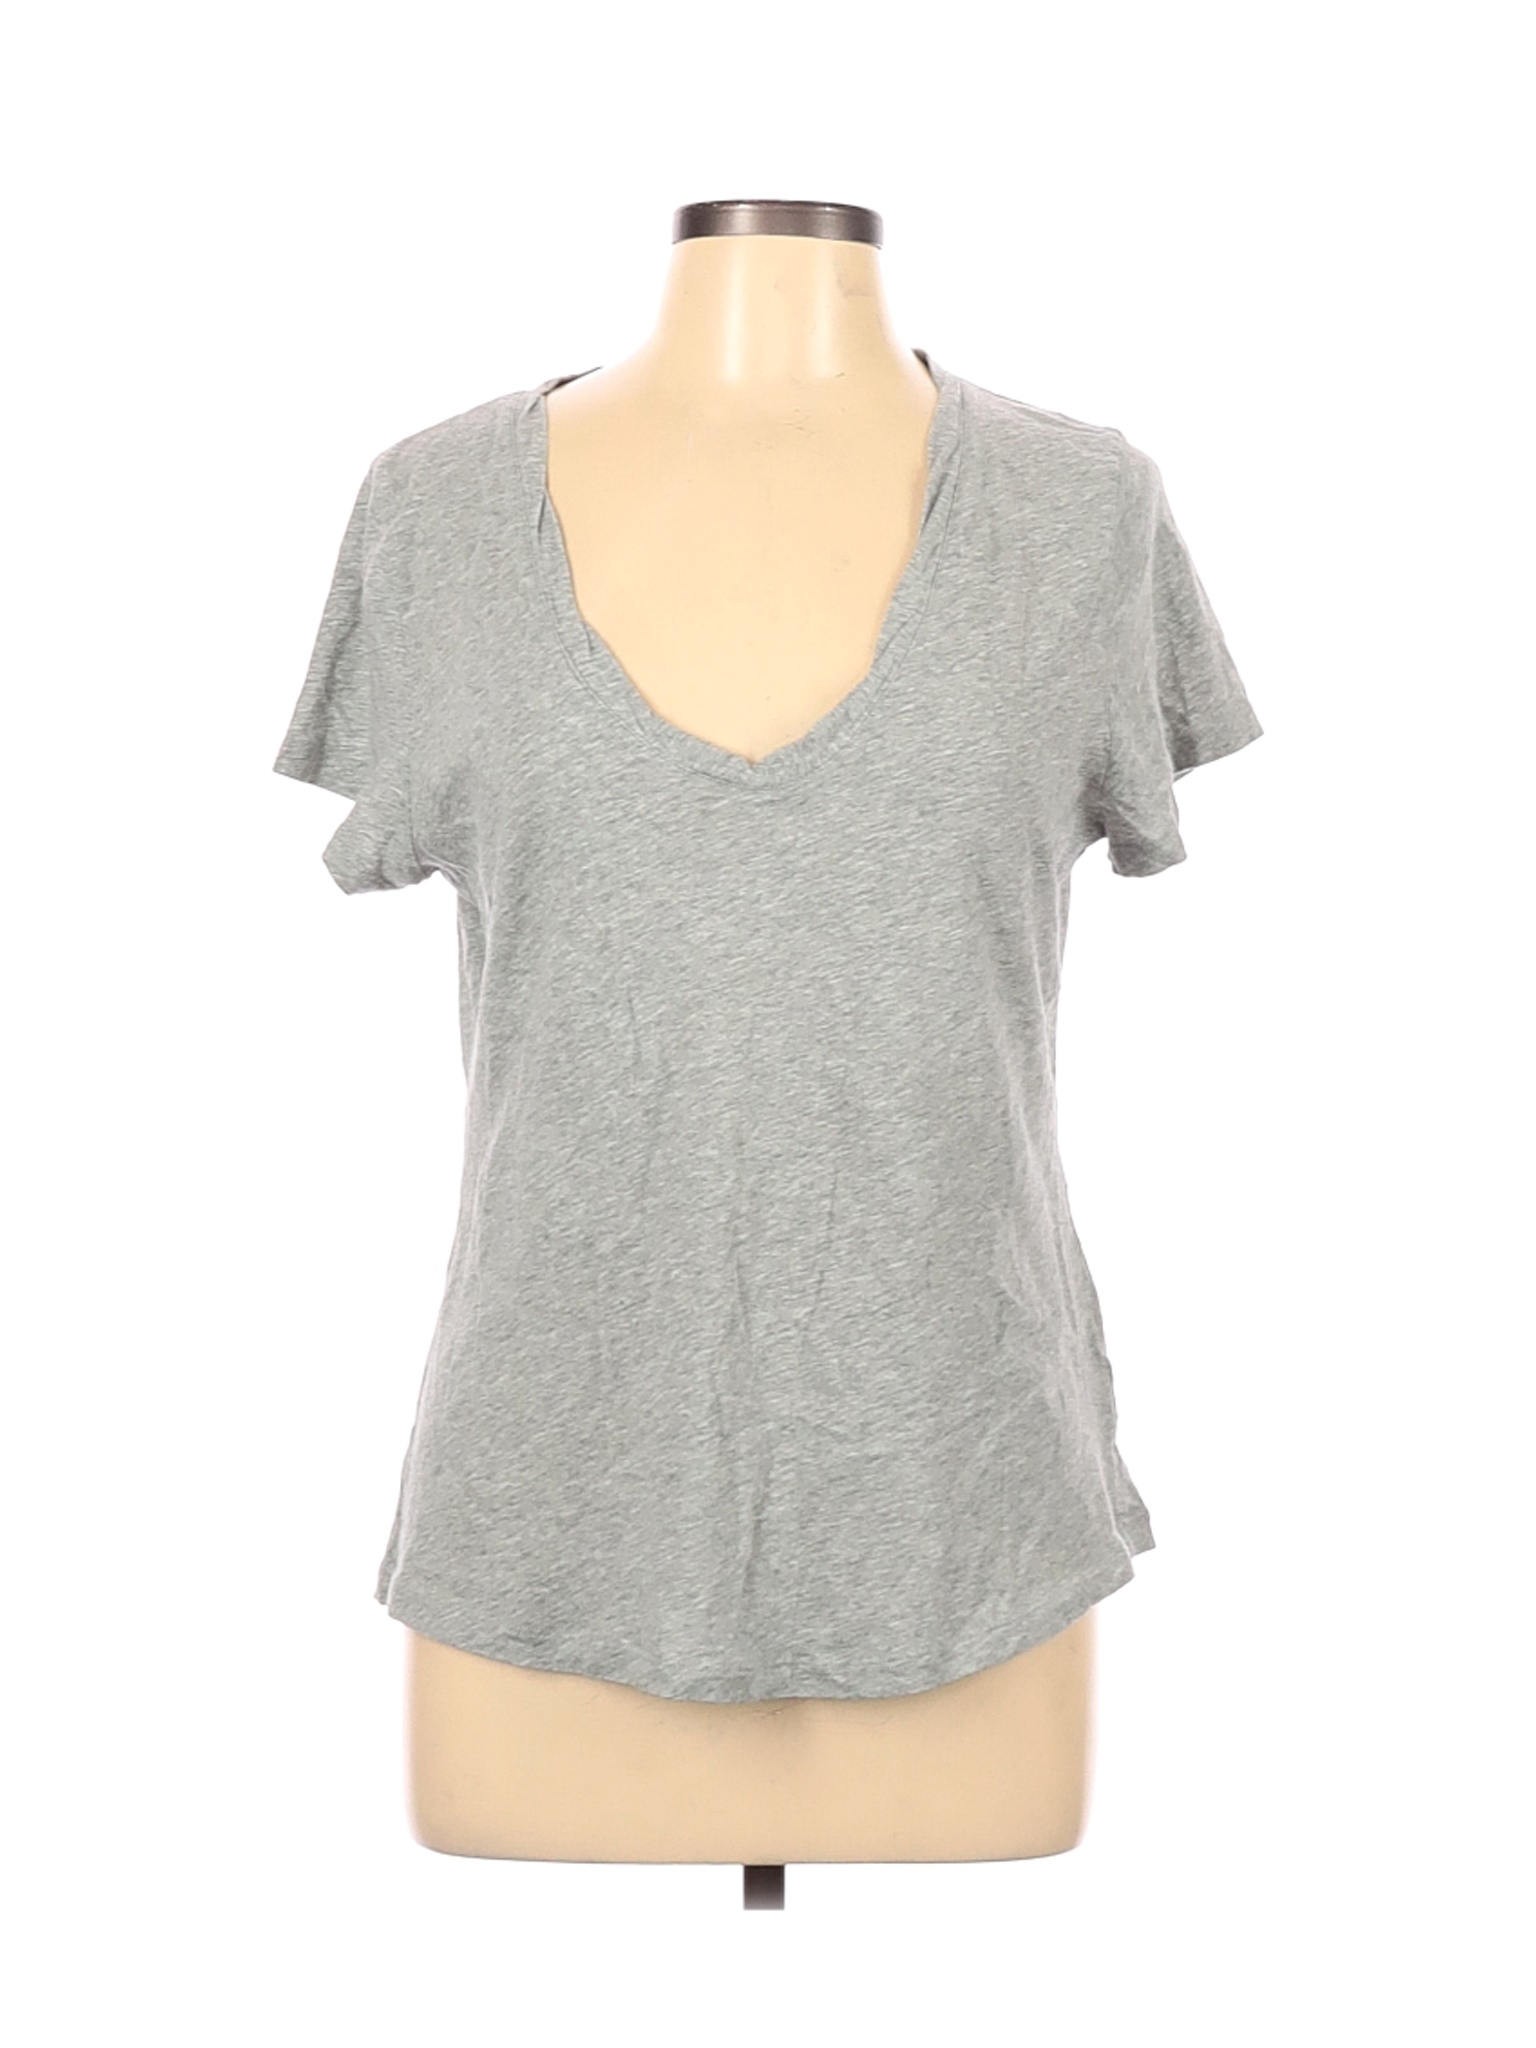 J.Crew Women Gray Short Sleeve T-Shirt XL | eBay